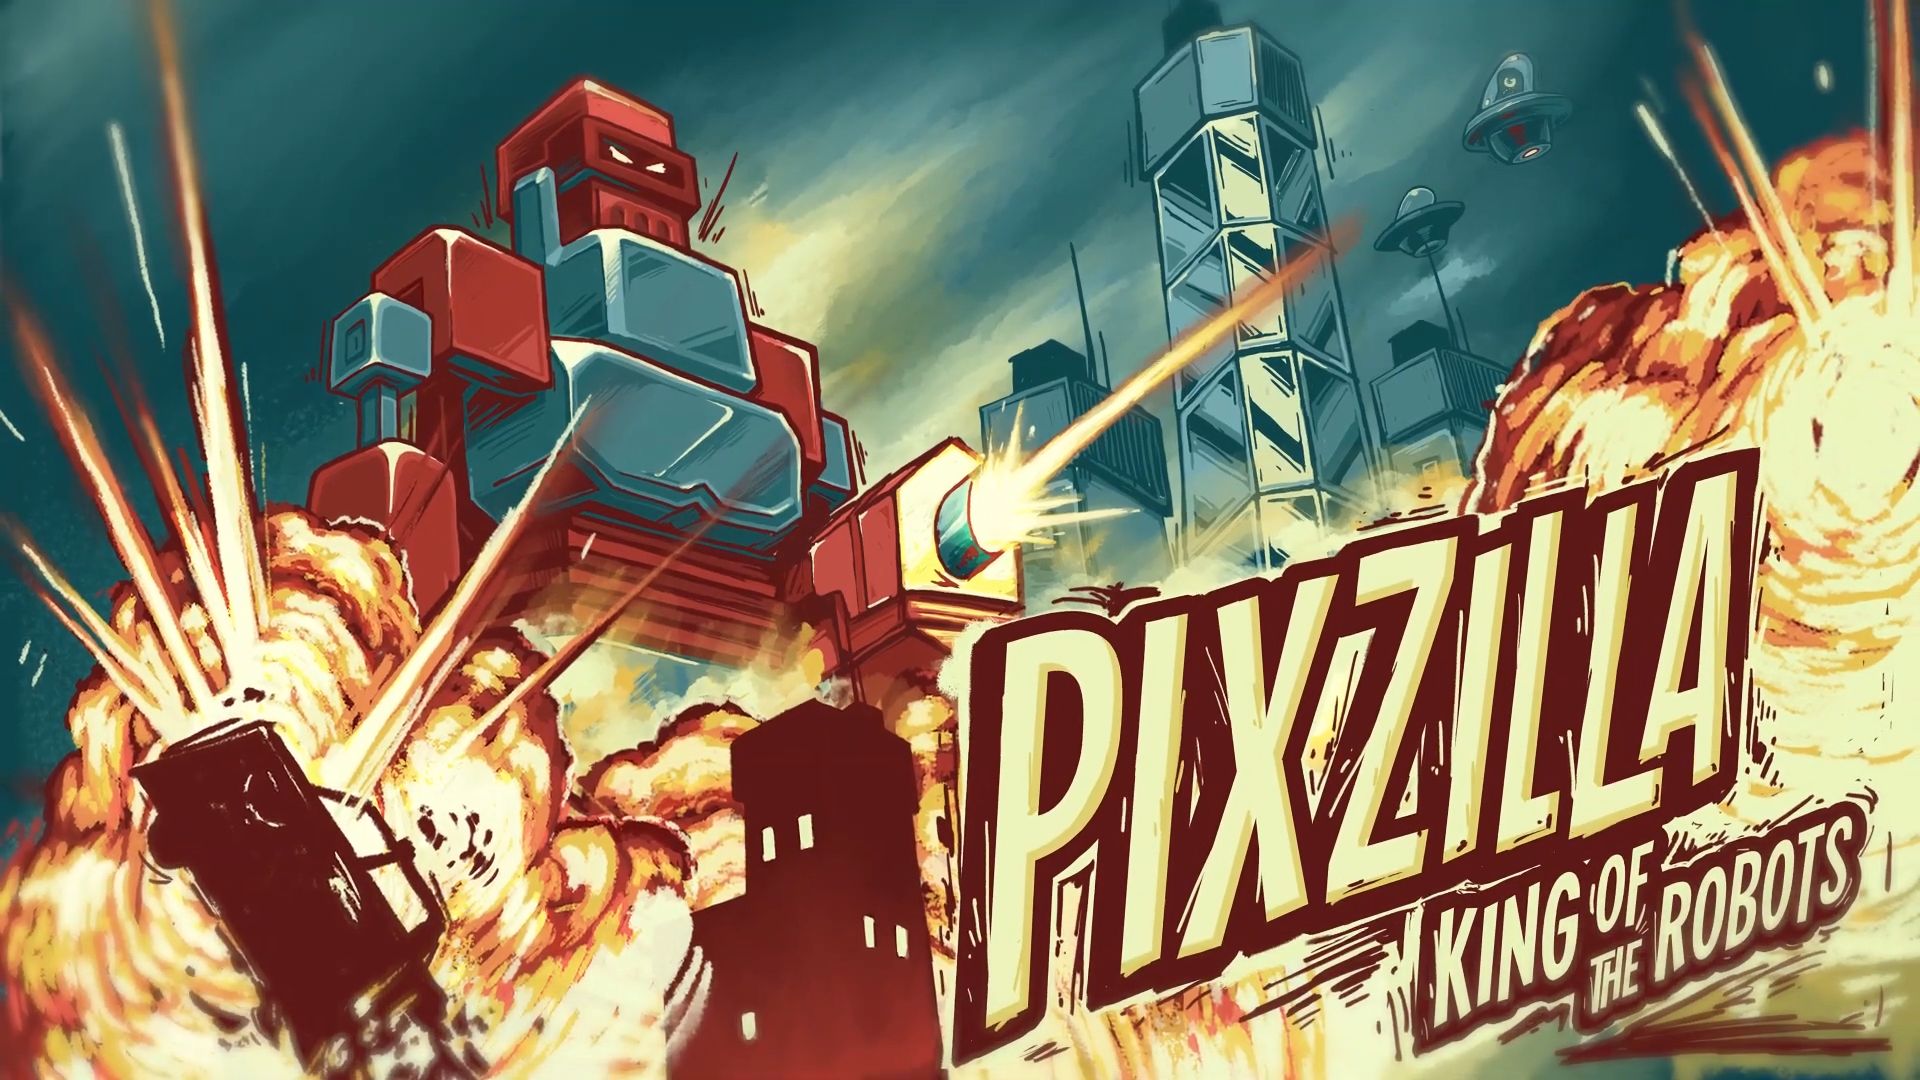 Download Pixzilla / King of the Robots für Android kostenlos.